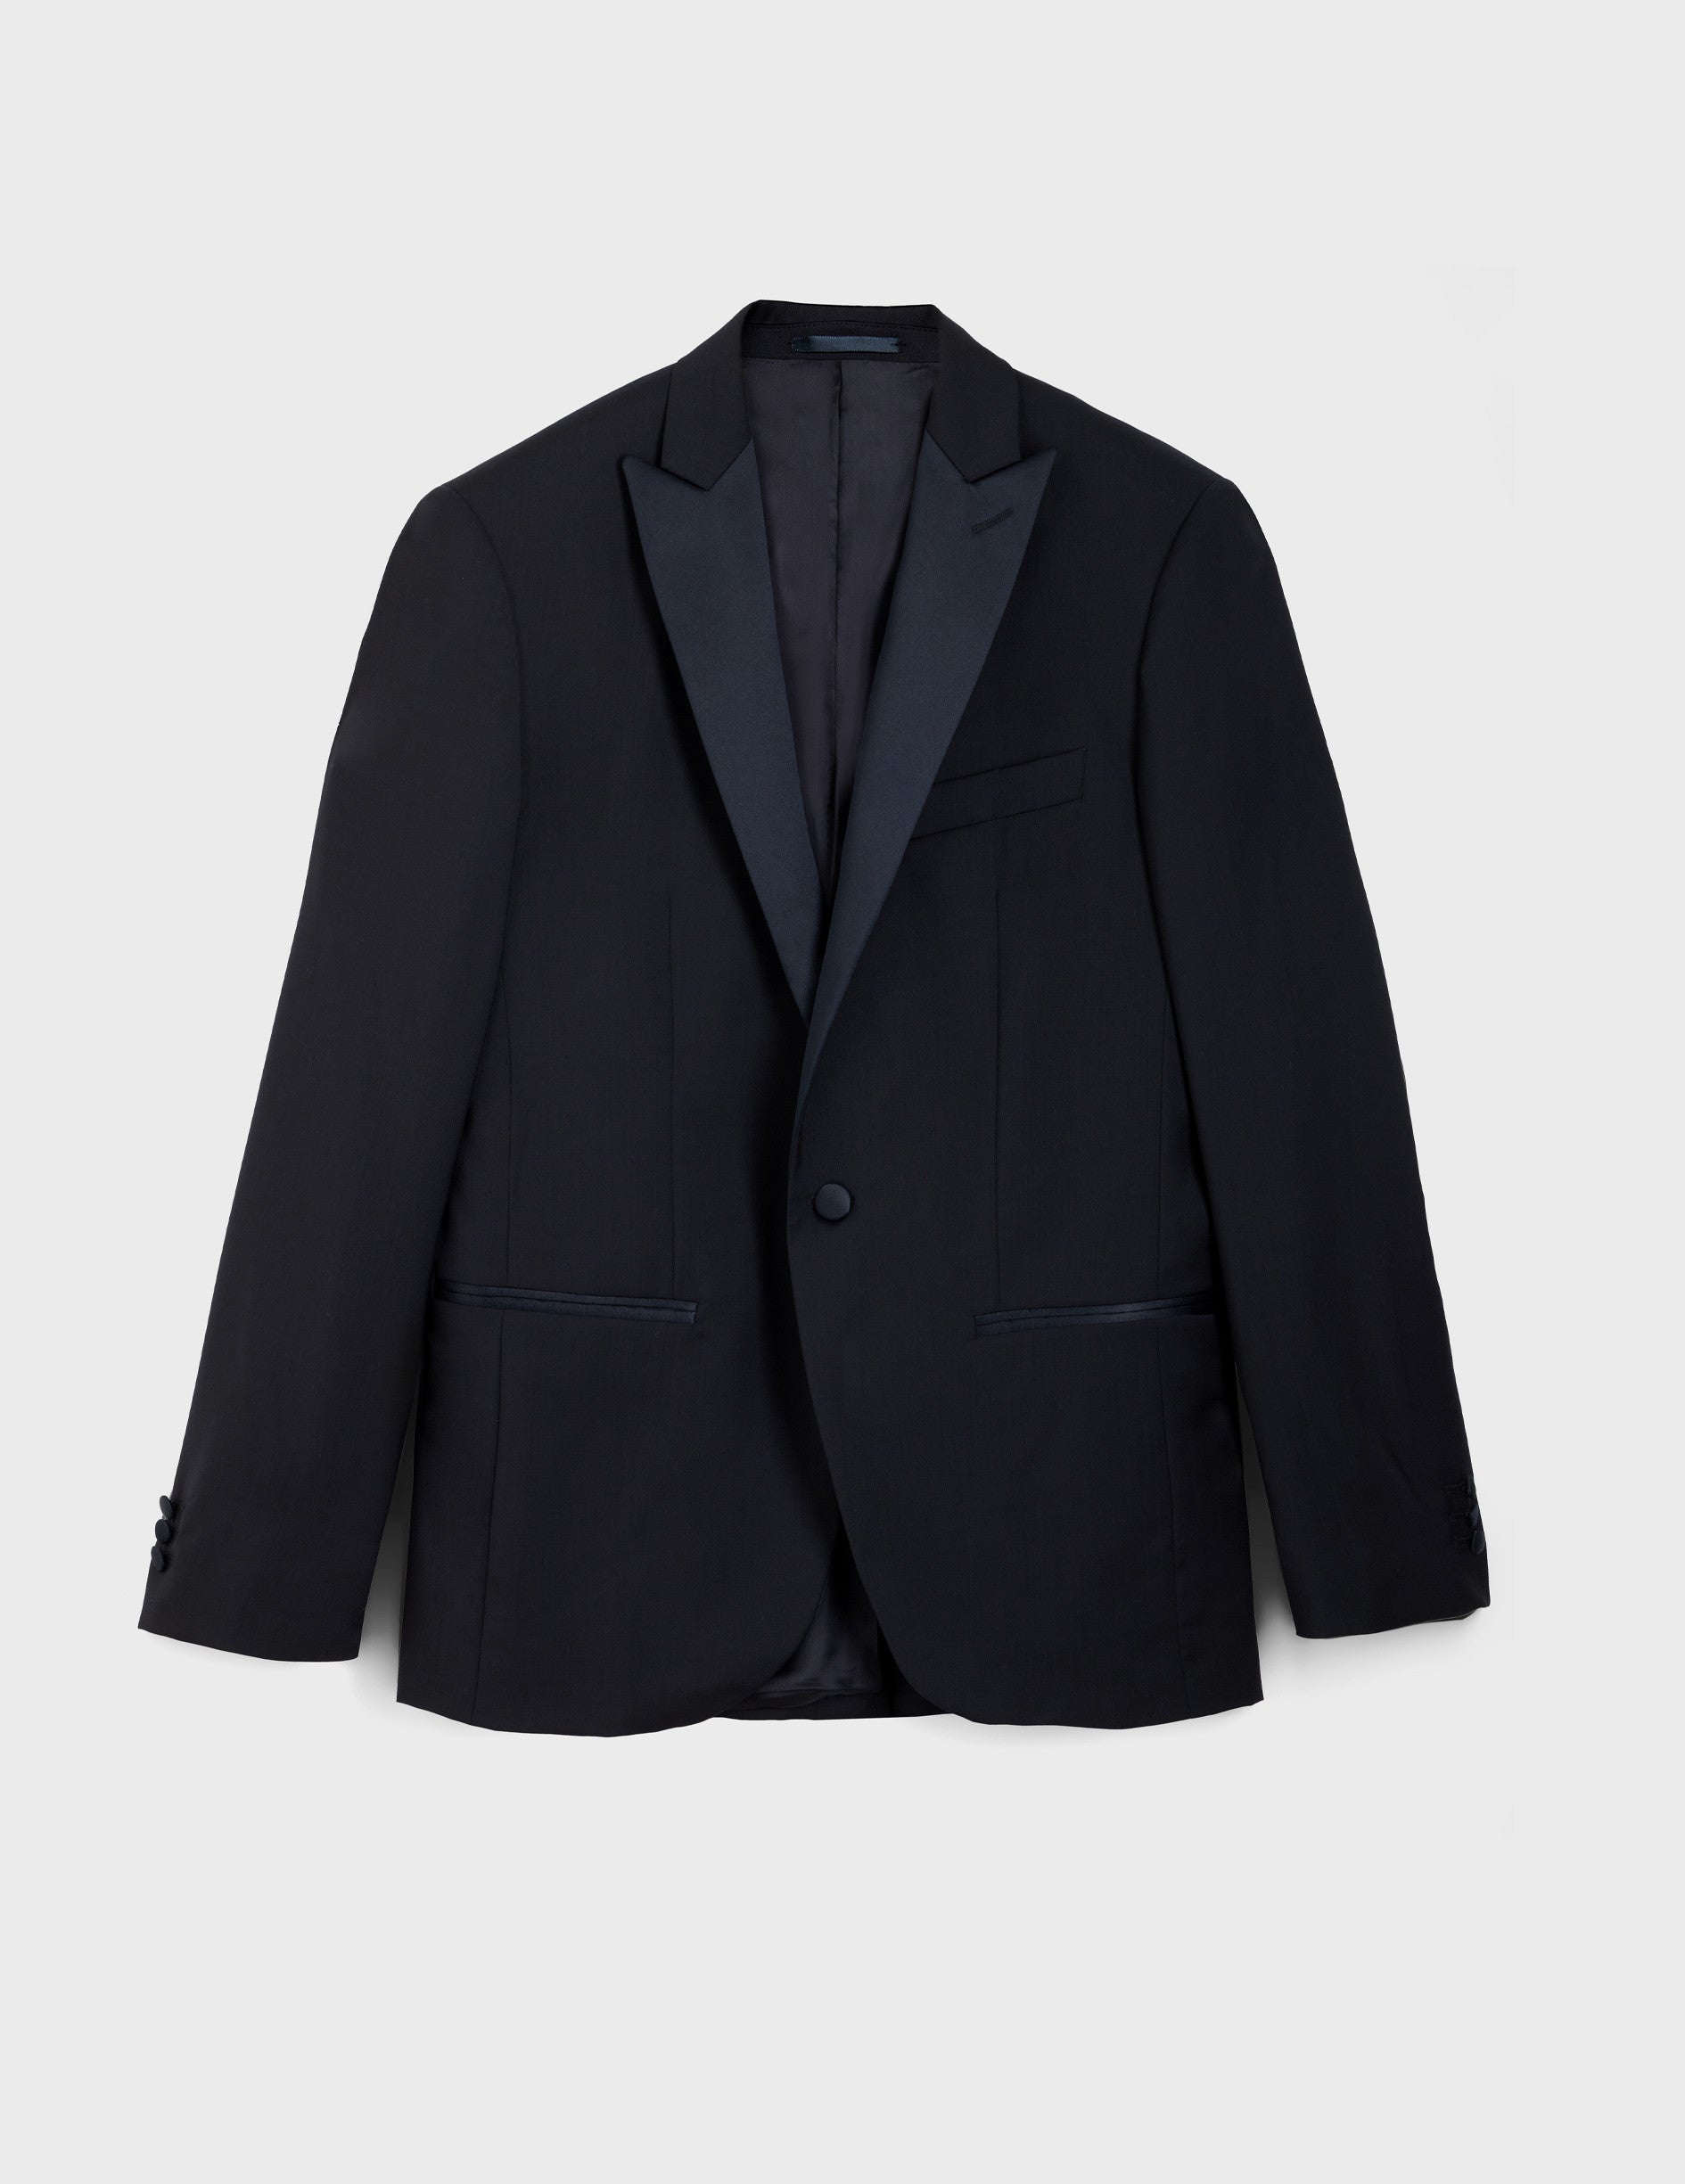 Midnight blue wool canvas Franck suit jacket